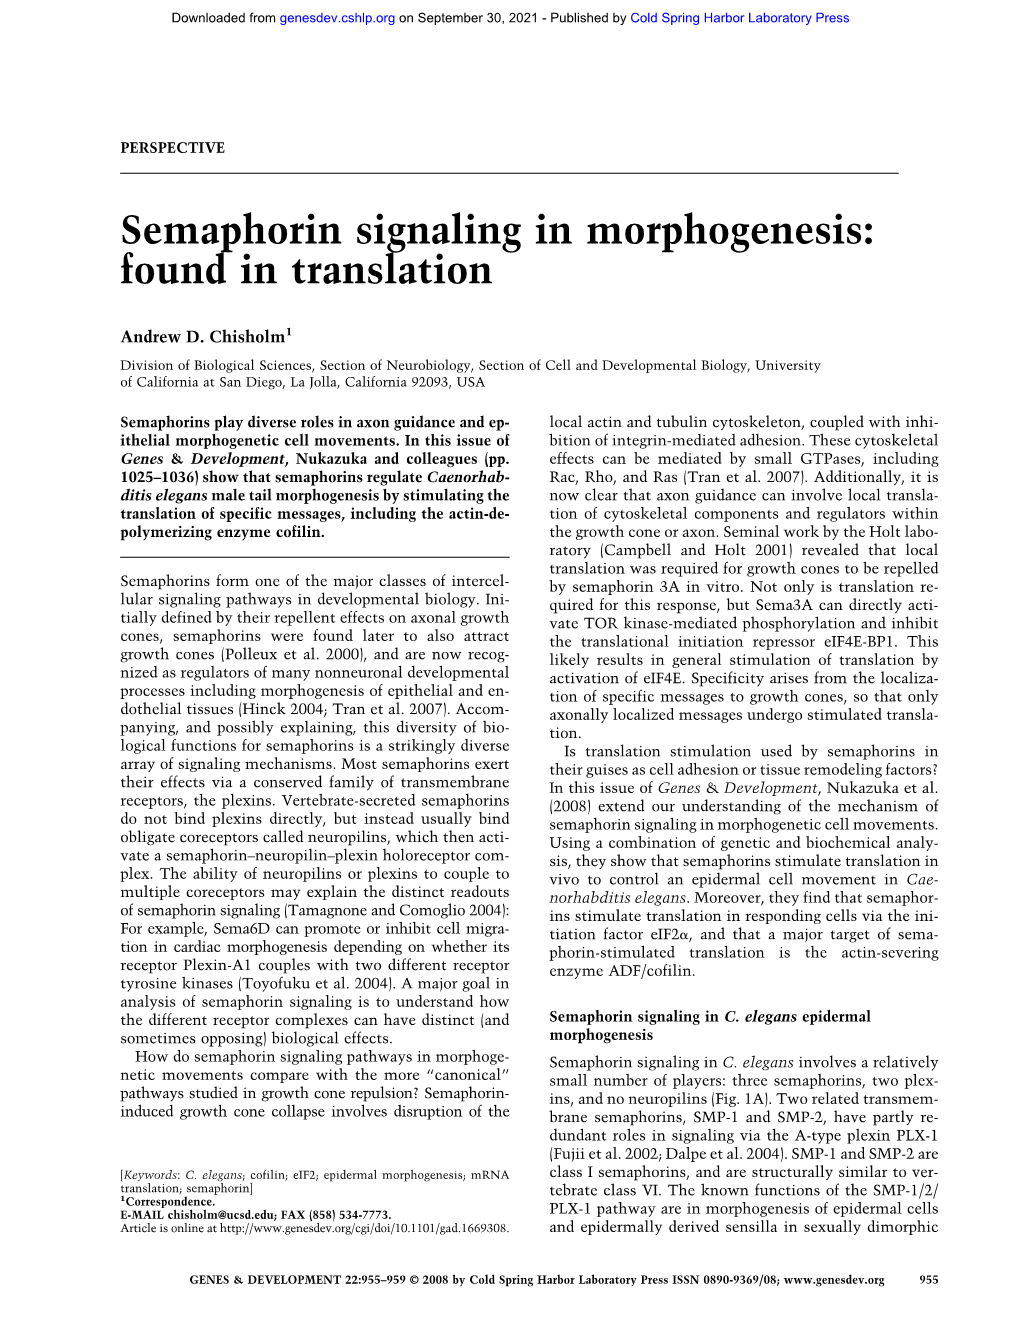 Semaphorin Signaling in Morphogenesis: Found in Translation